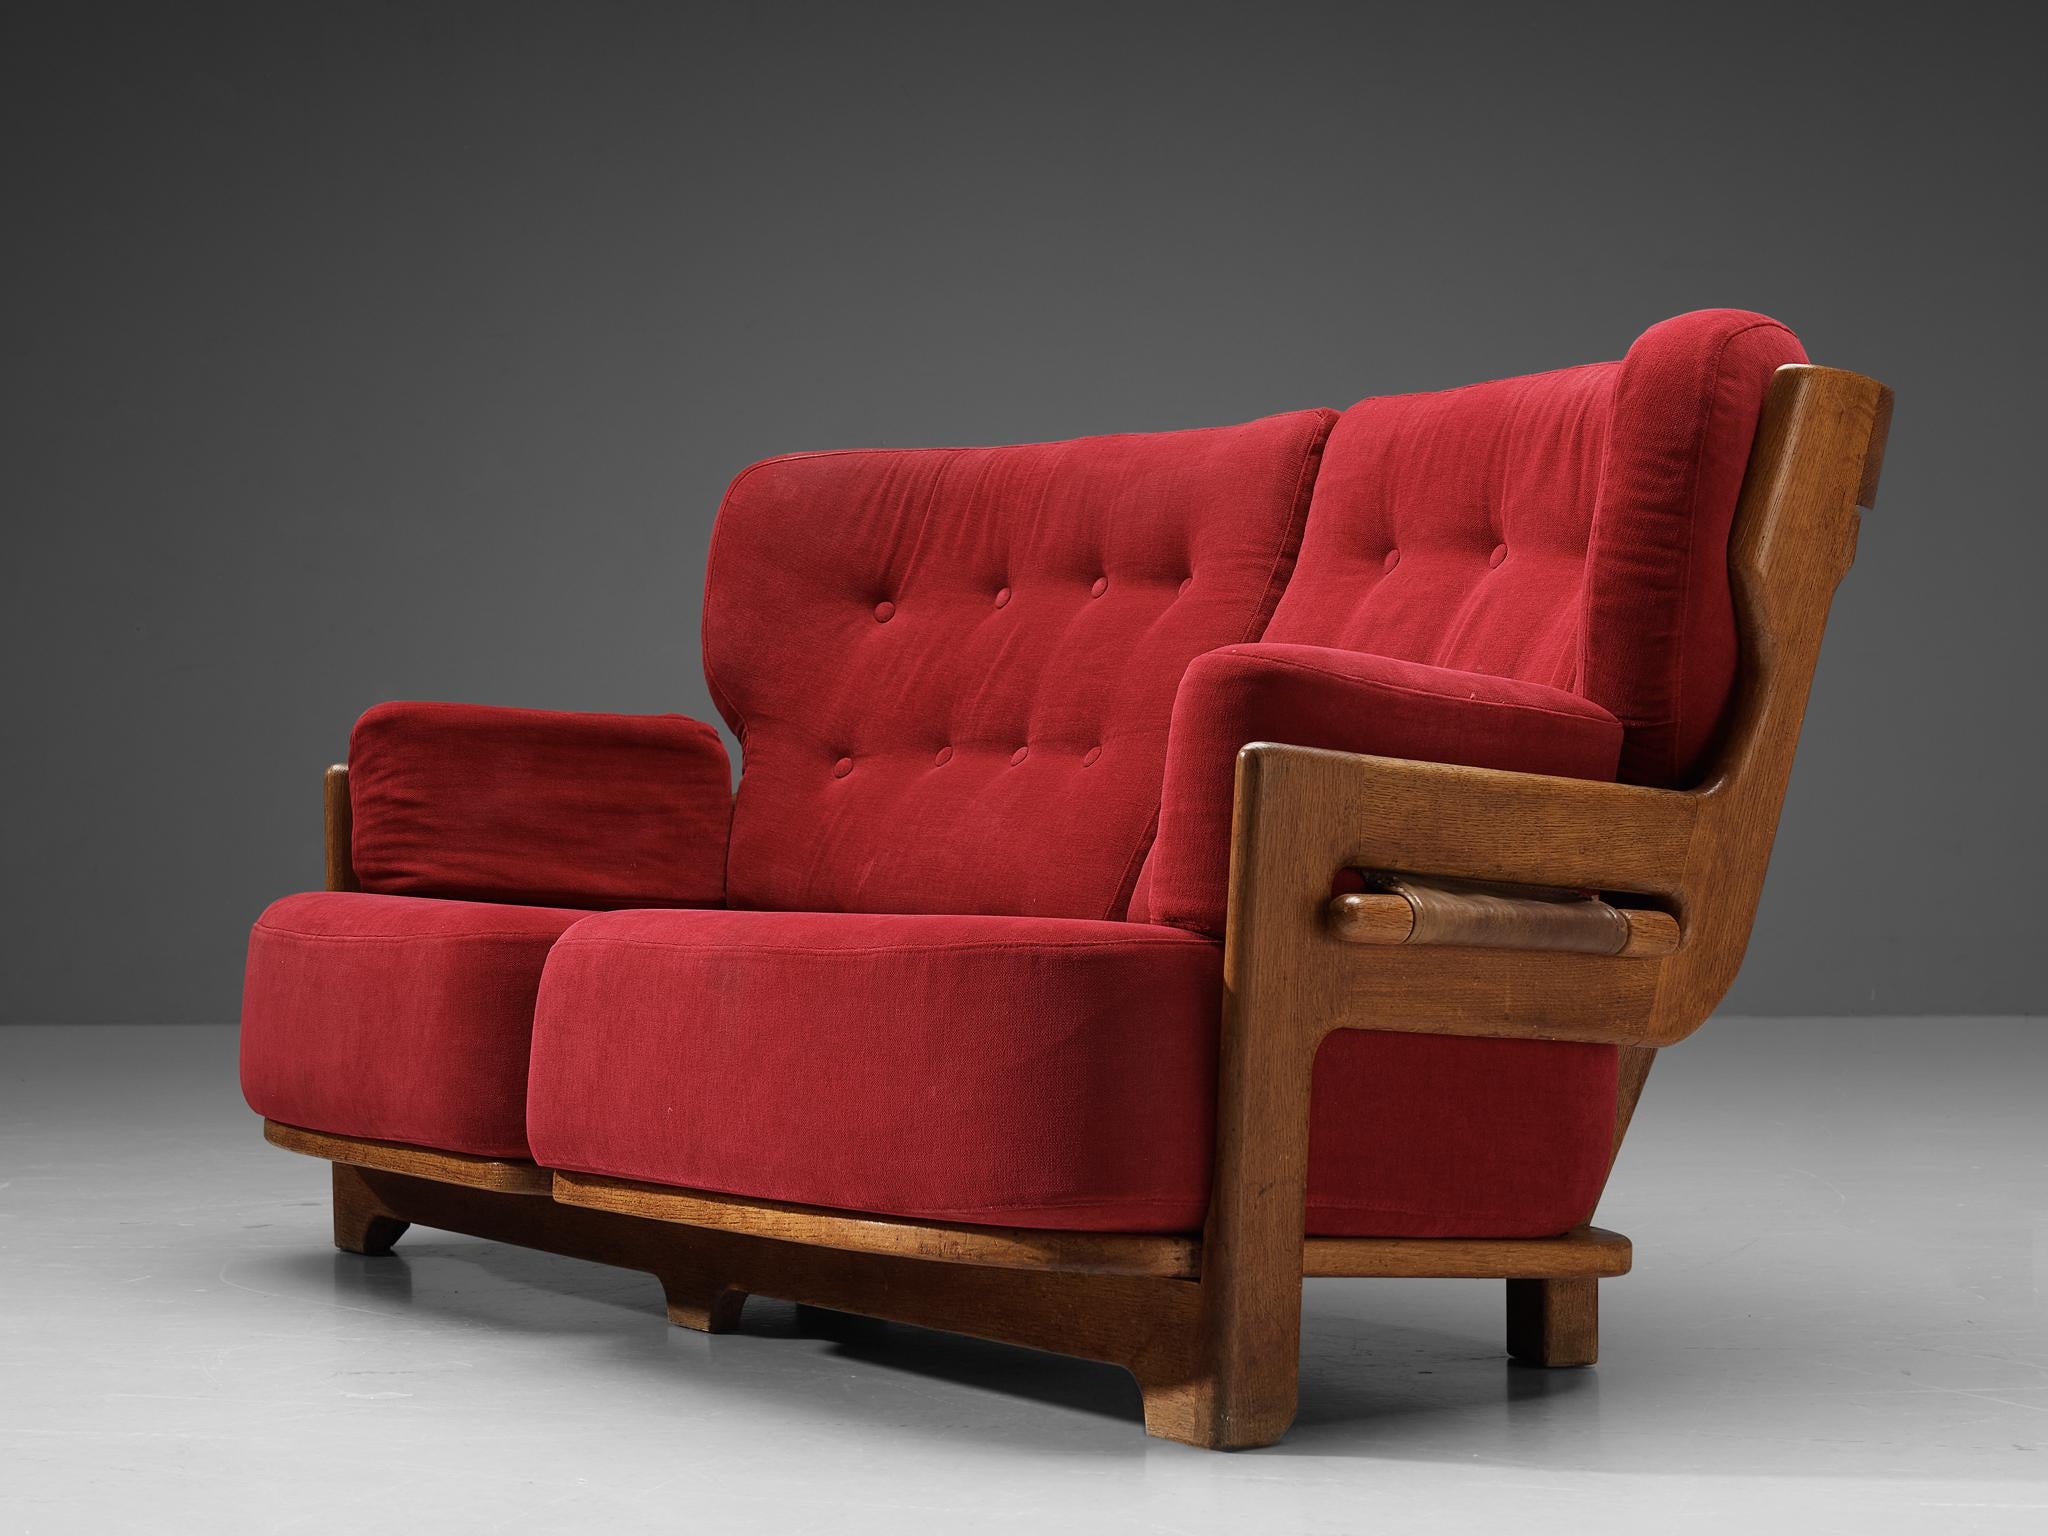 Guillerme & Chambron Sofa 'Denis' in Solid Oak and Red Velvet